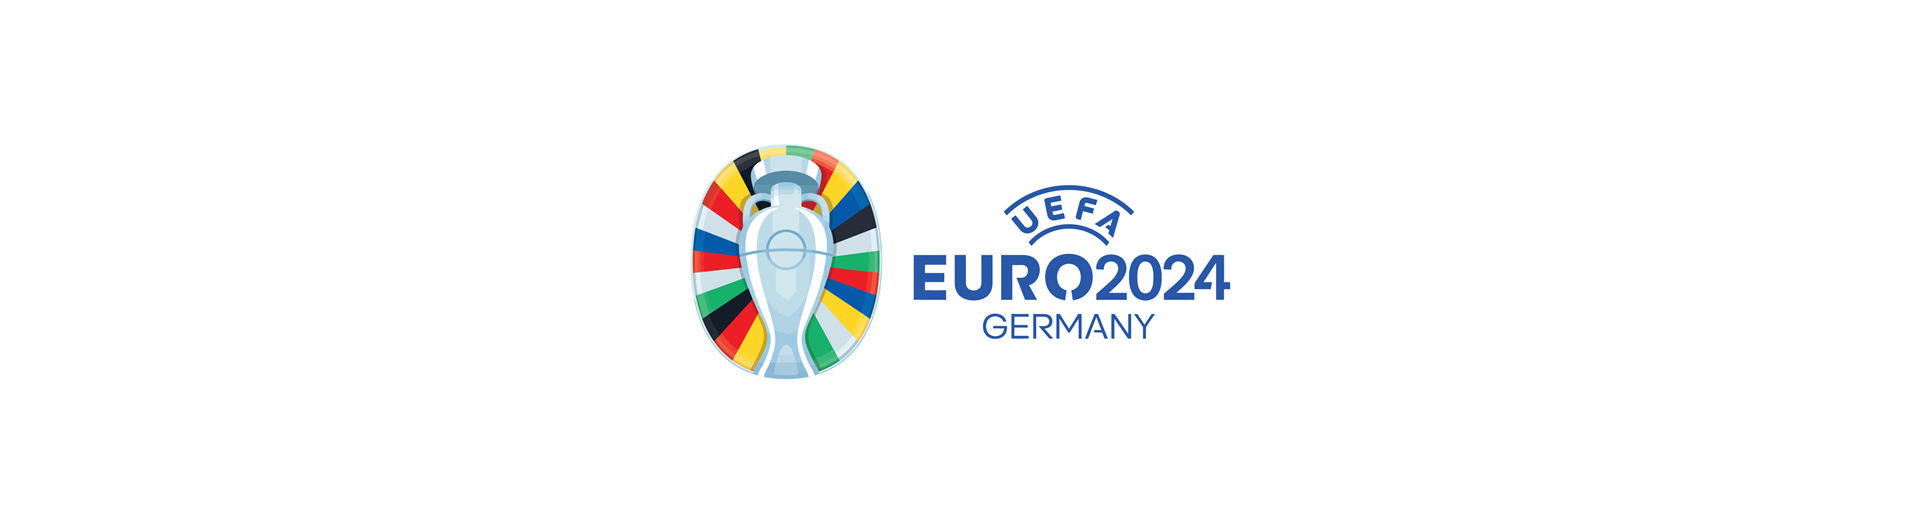 European Championships Germany 2024